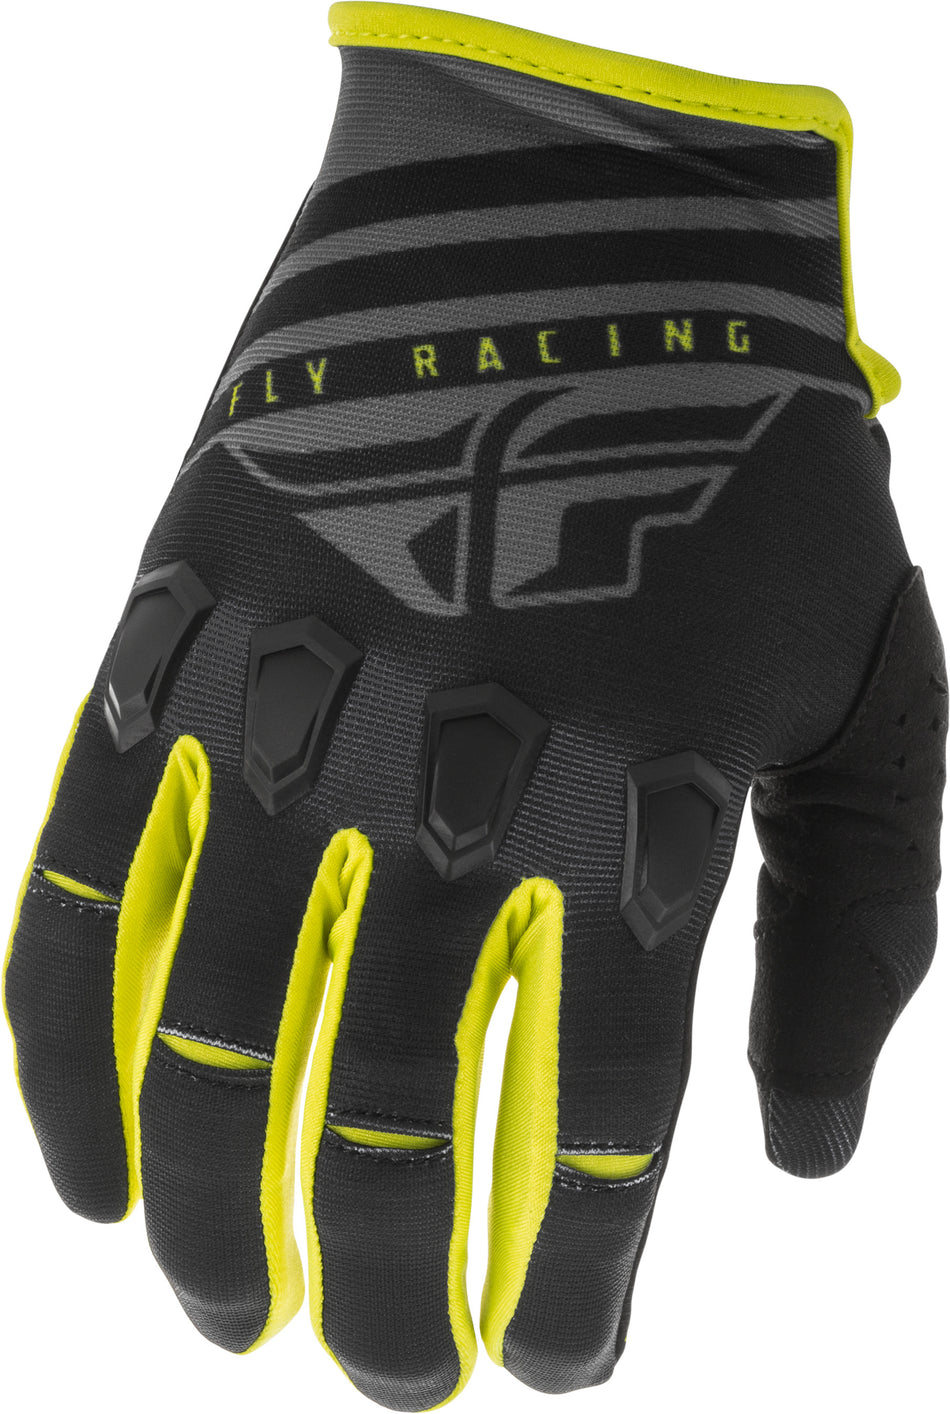 FLY RACING Kinetic K220 Gloves Black/Grey/Hi-Vis Sz 07 373-51507